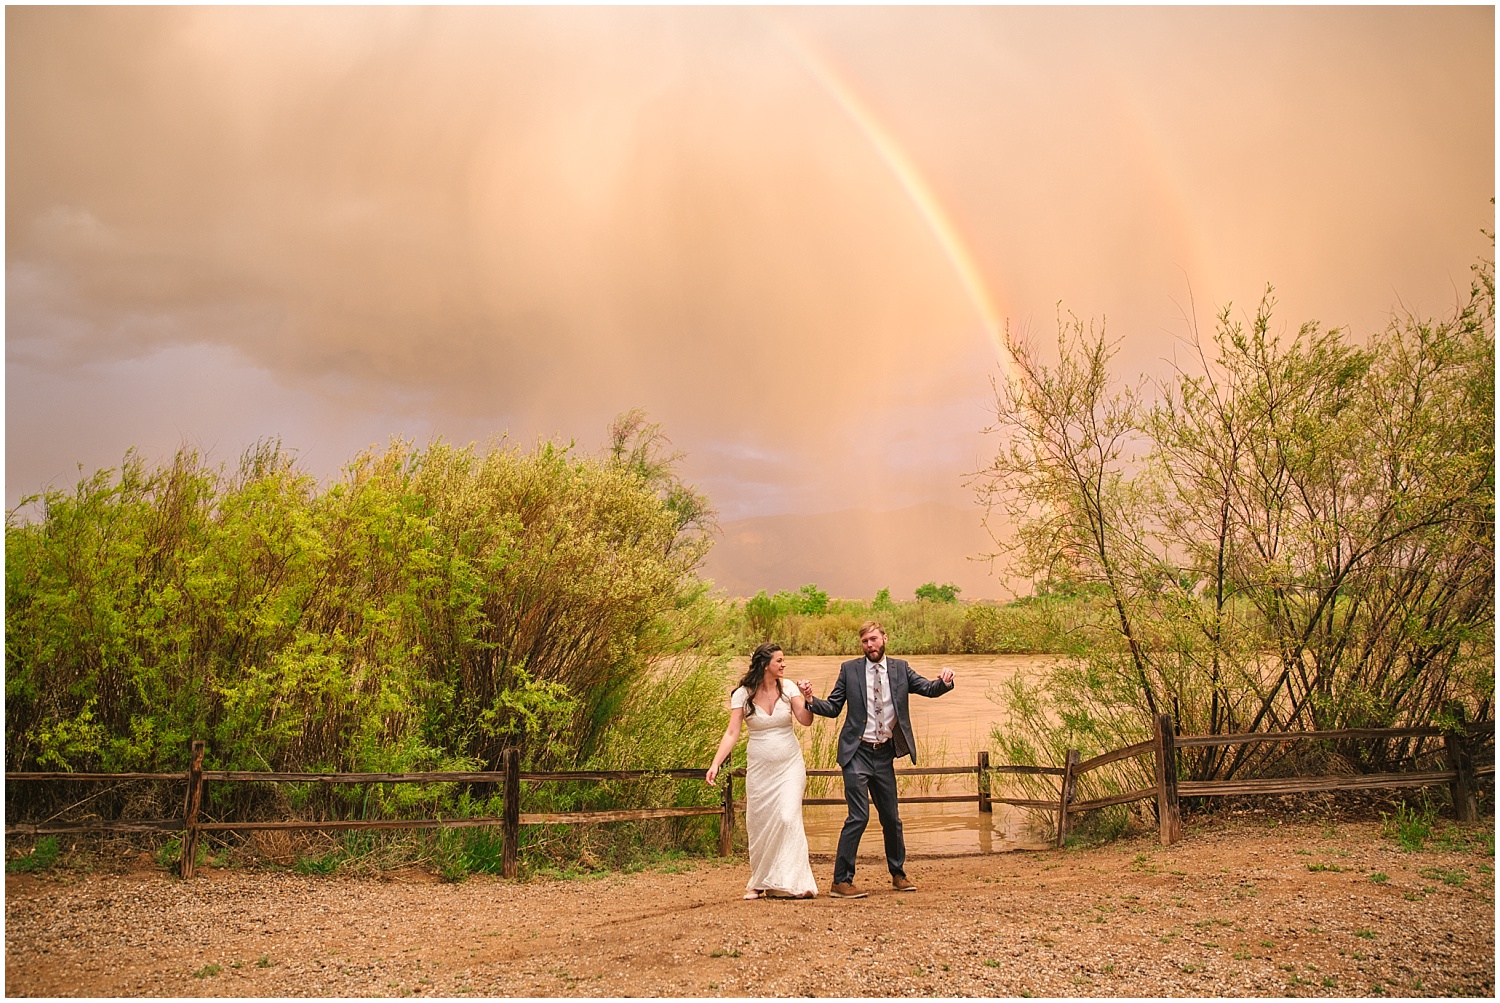 Double rainbow over dancing bride and groom at Hyatt Regency Tamaya wedding in New Mexico